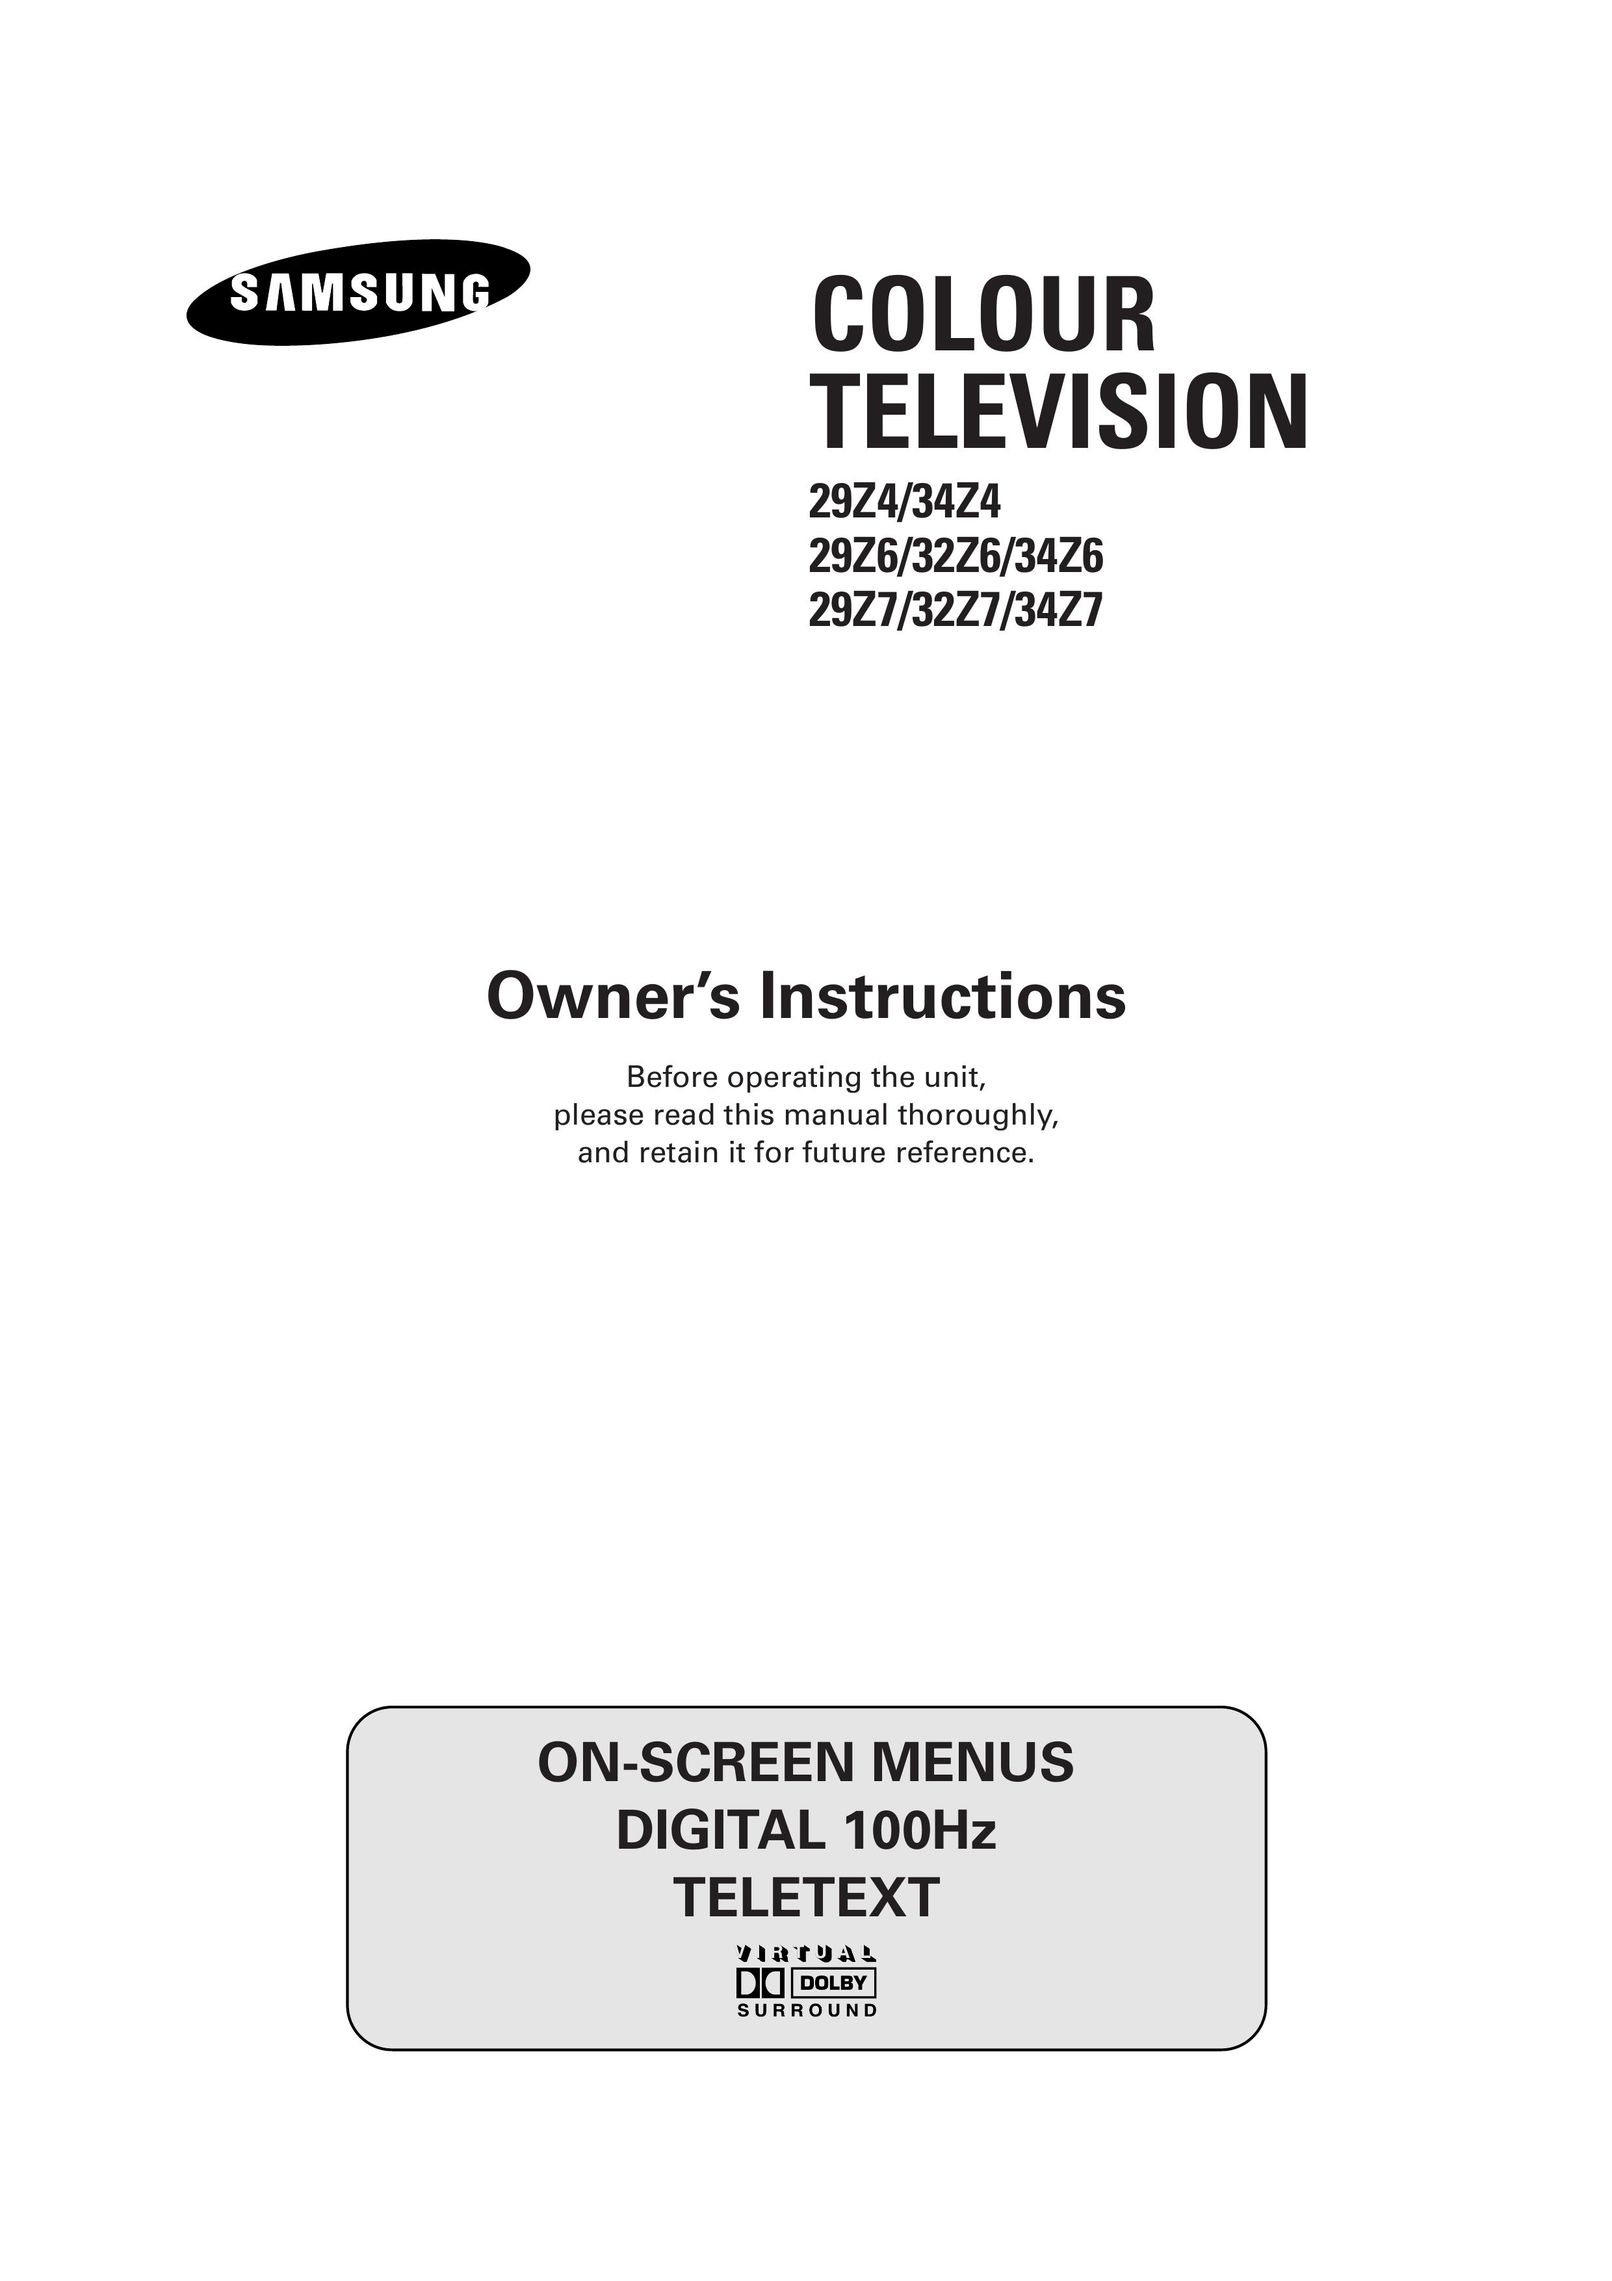 Samsung 34Z7 CRT Television User Manual